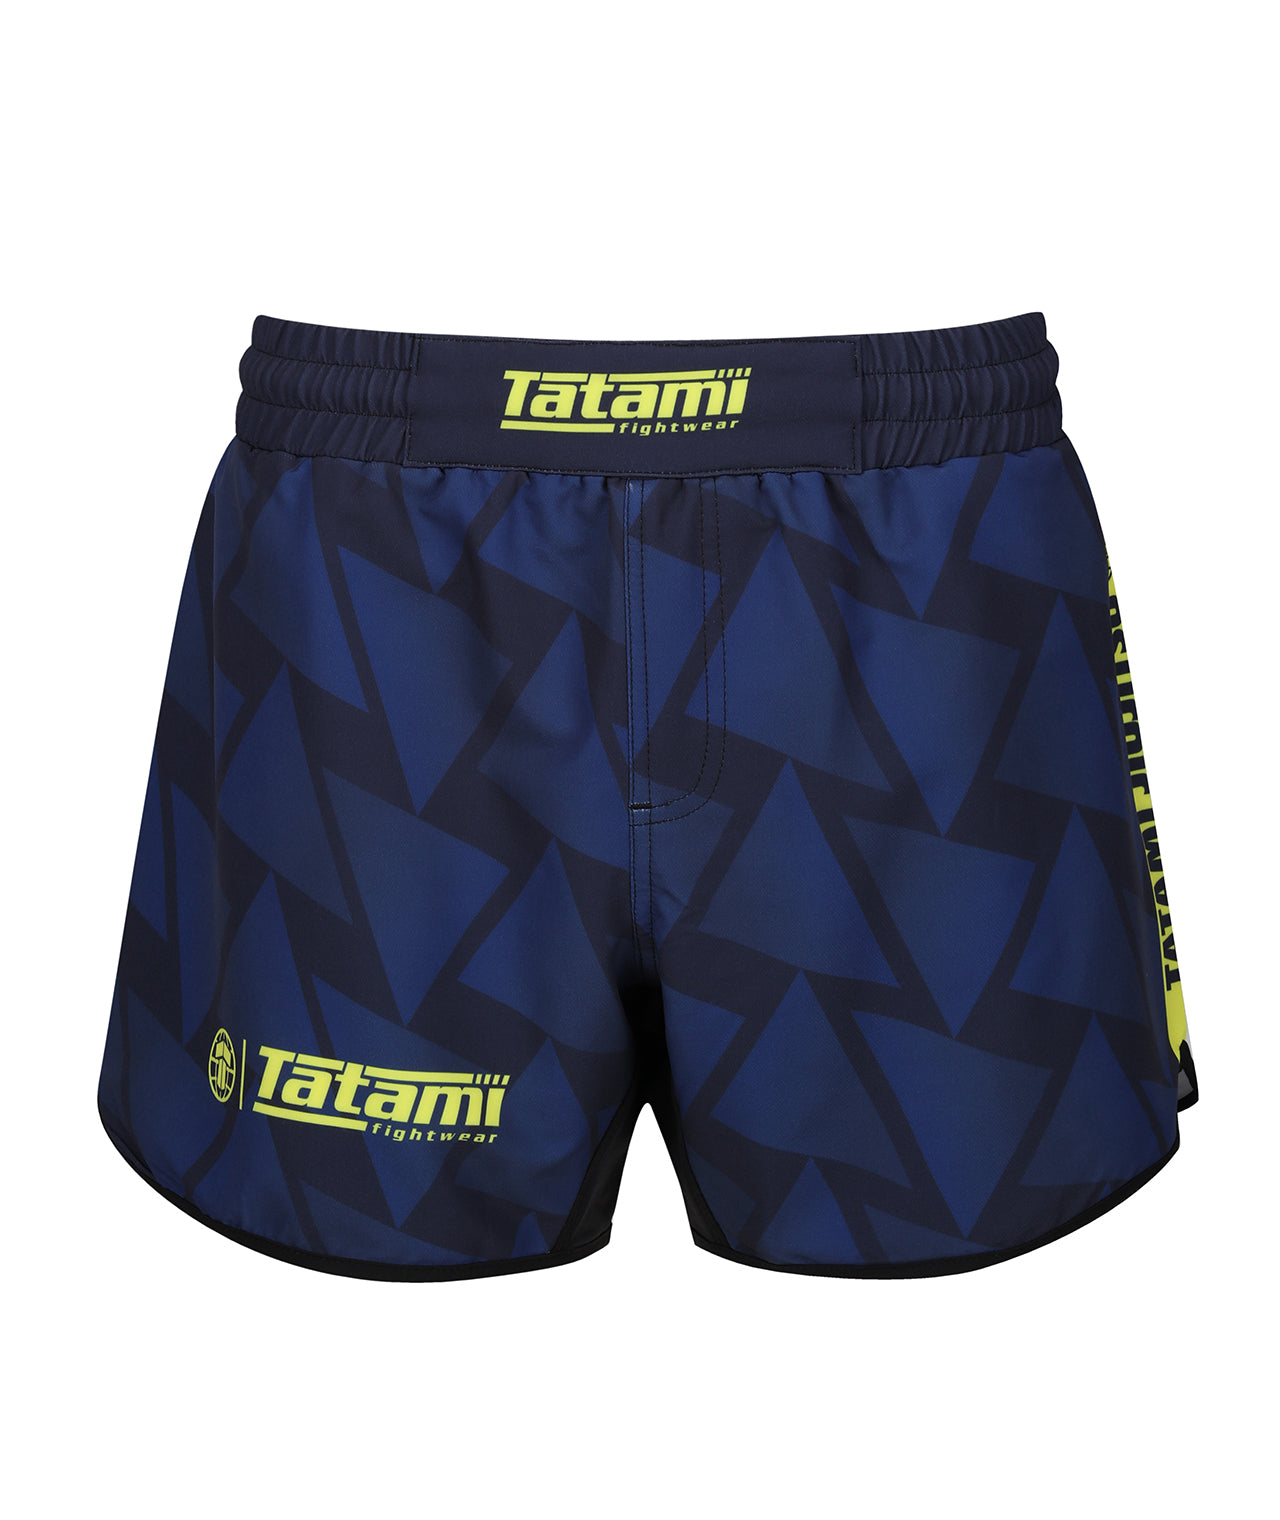 Lux Baseline Shorts (5 in. inseam) - Navy/Jet Stream/Steel Blue